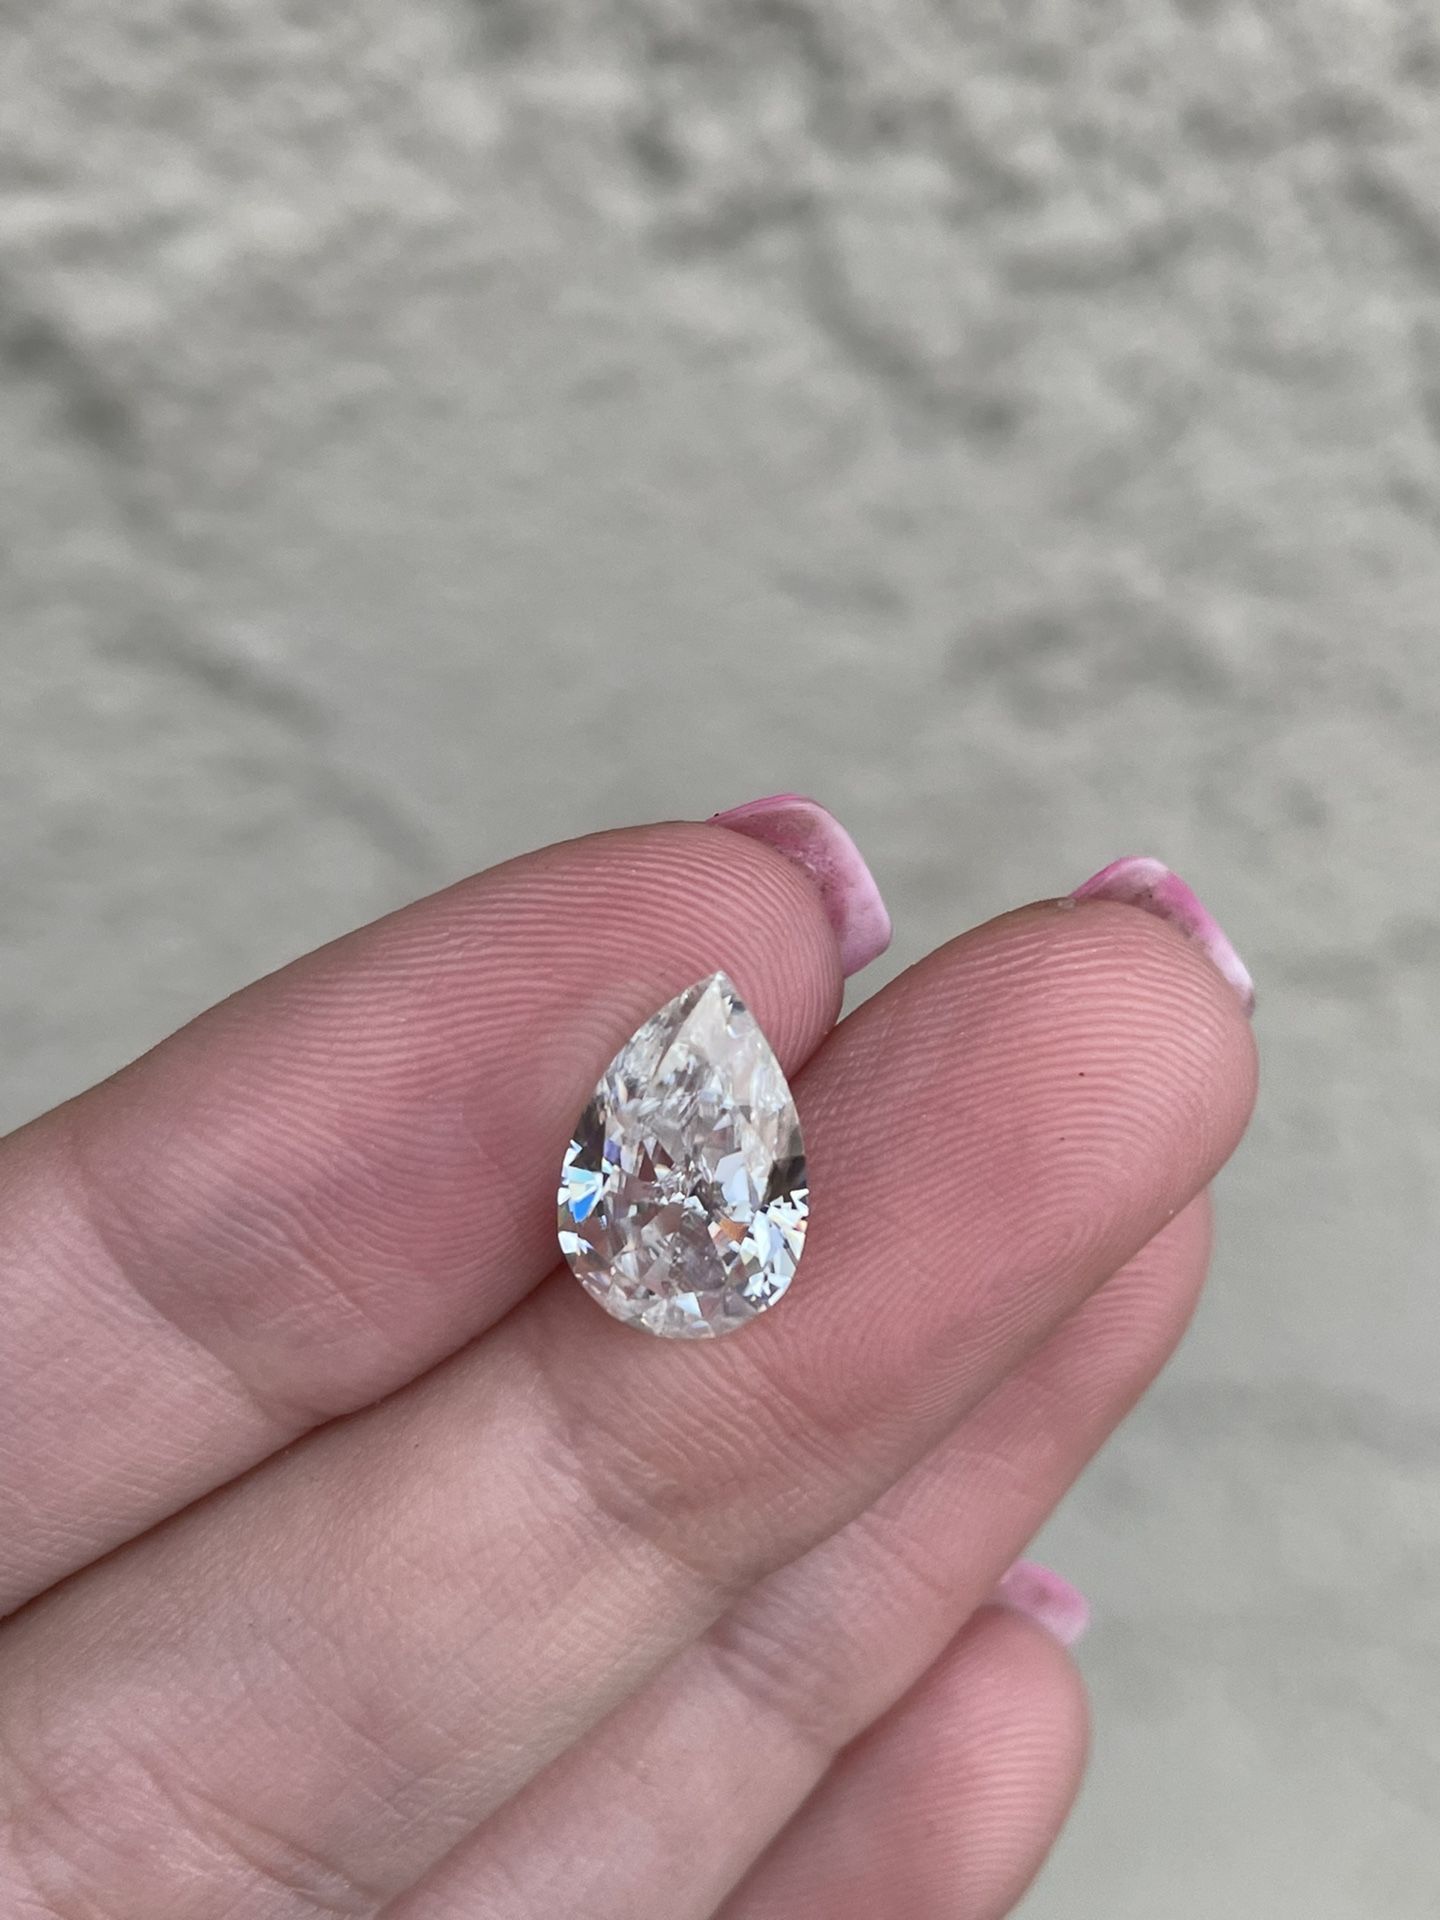 4 Carat Pear Shape Moissanite Diamond Loose Stone 